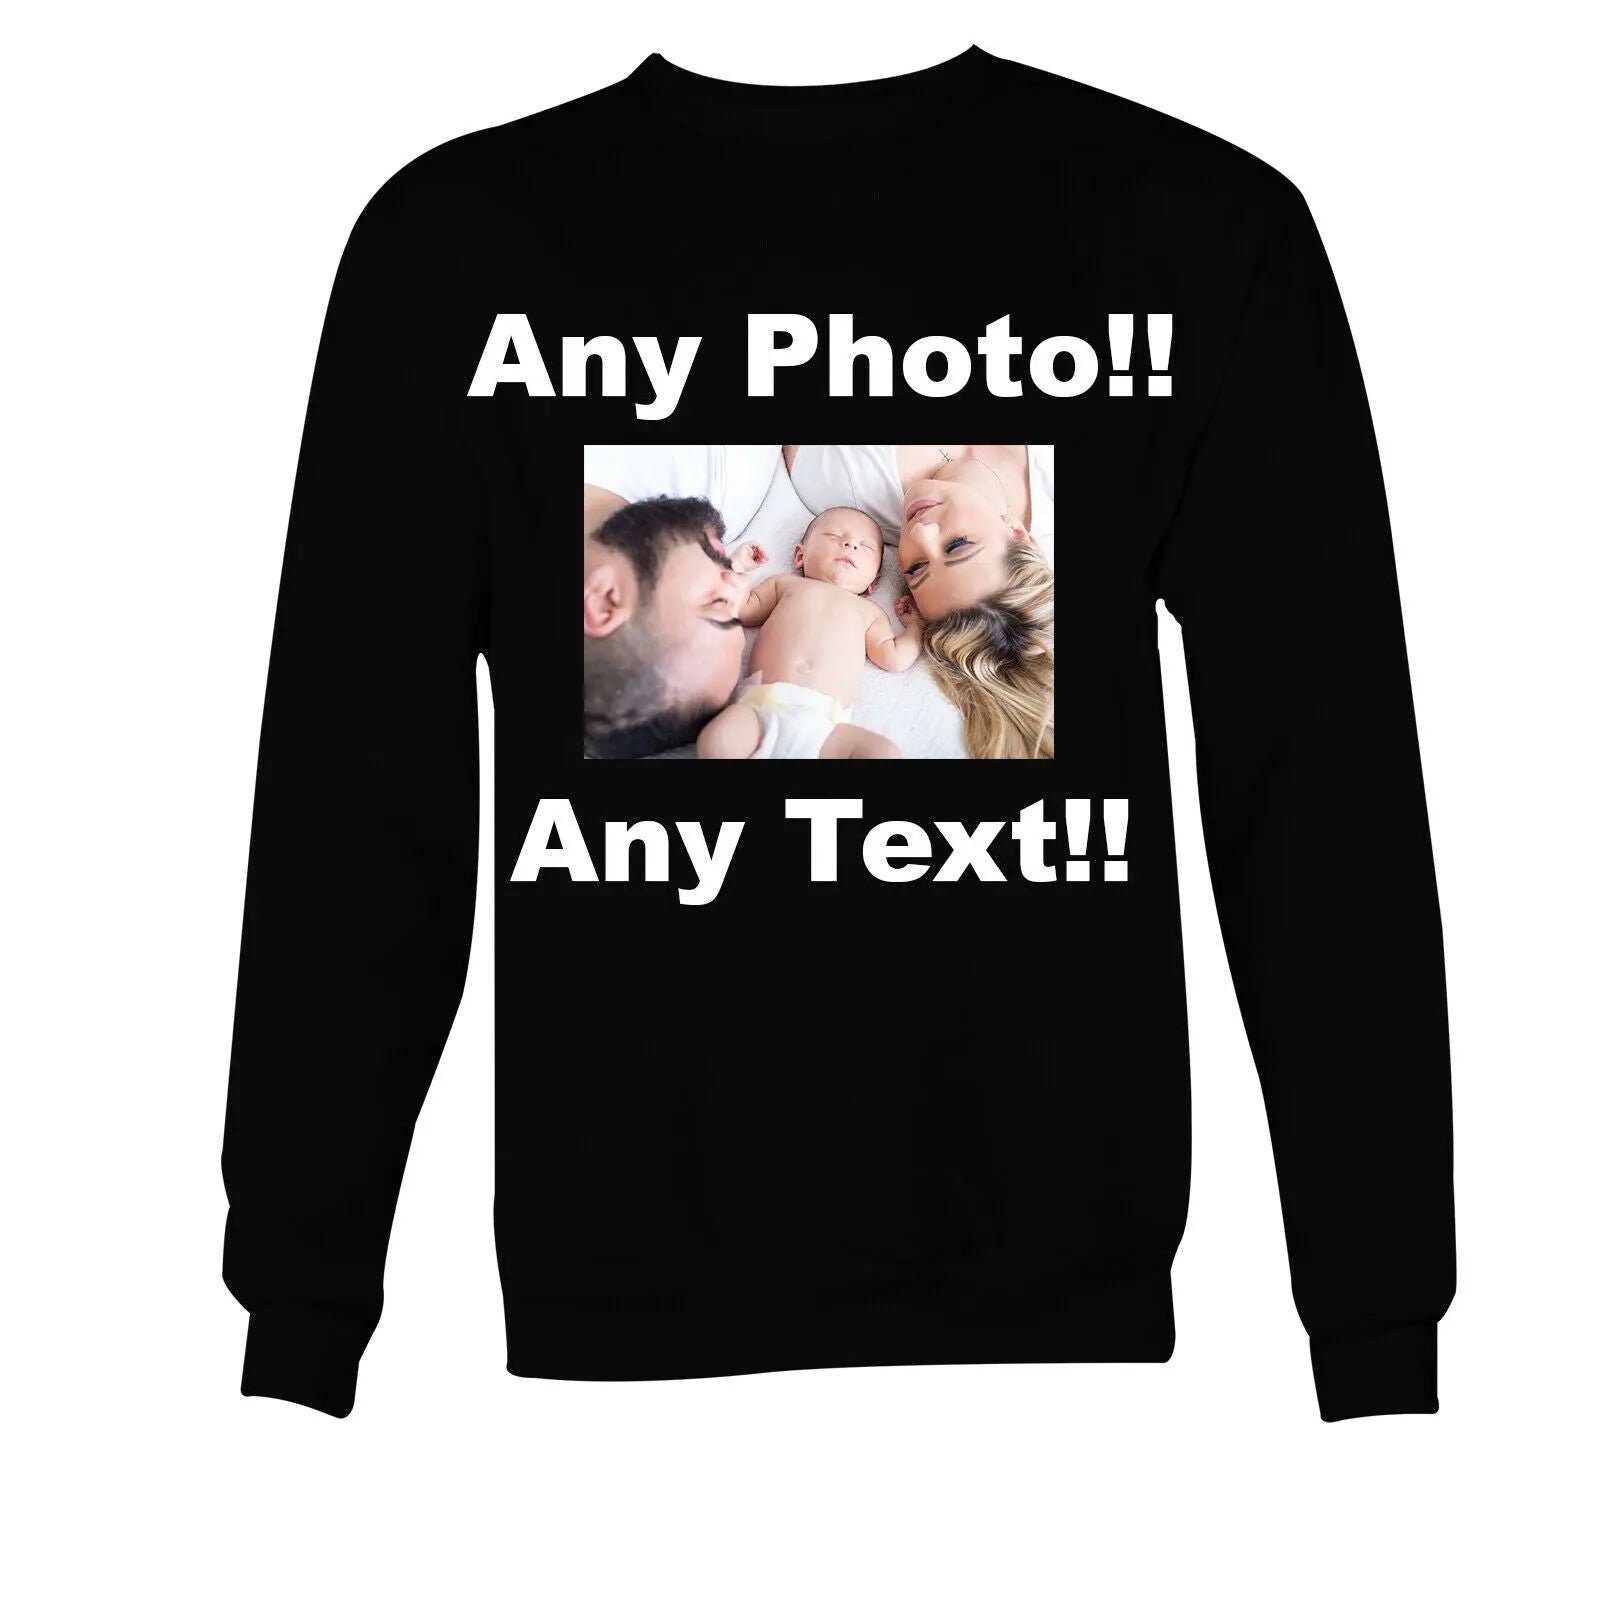 Personalised Photo Sweater Printed Custom Text Women Men Kids - CushionPop